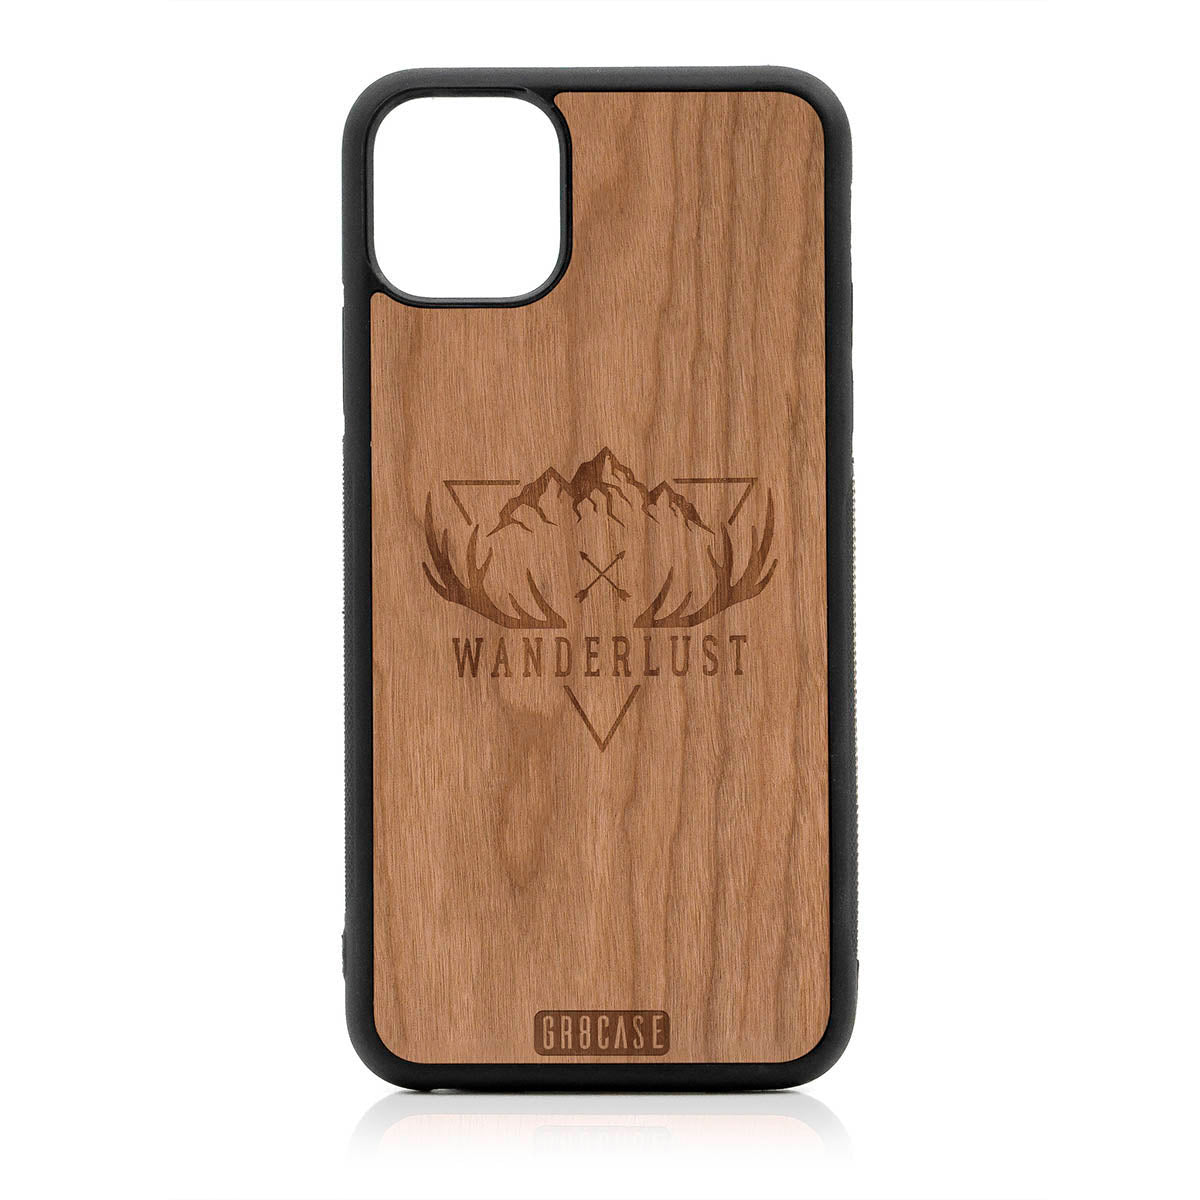 Wanderlust Design Wood Case For iPhone 11 Pro Max